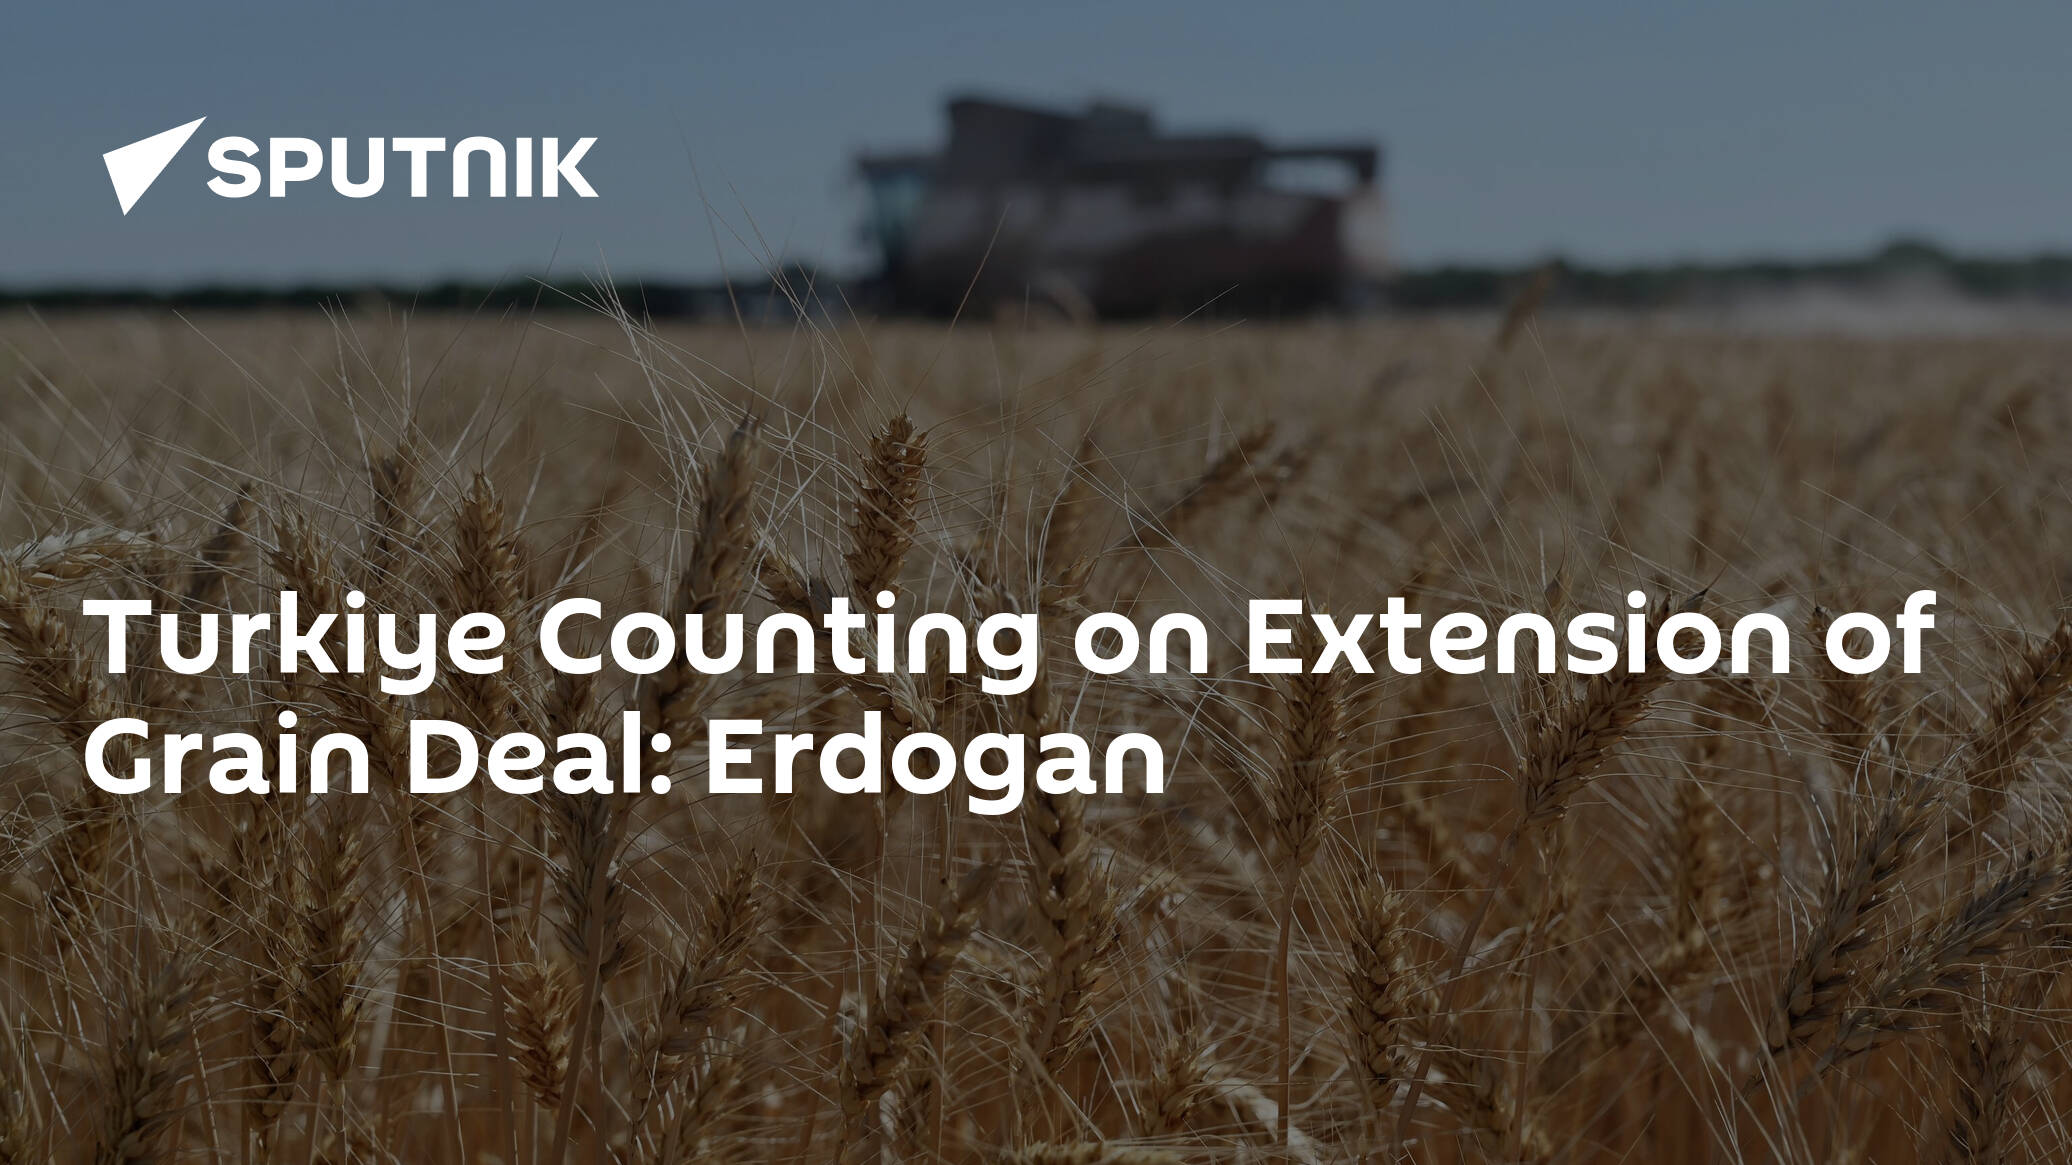 Turkiye Counting on Extension of Grain Deal: Erdogan